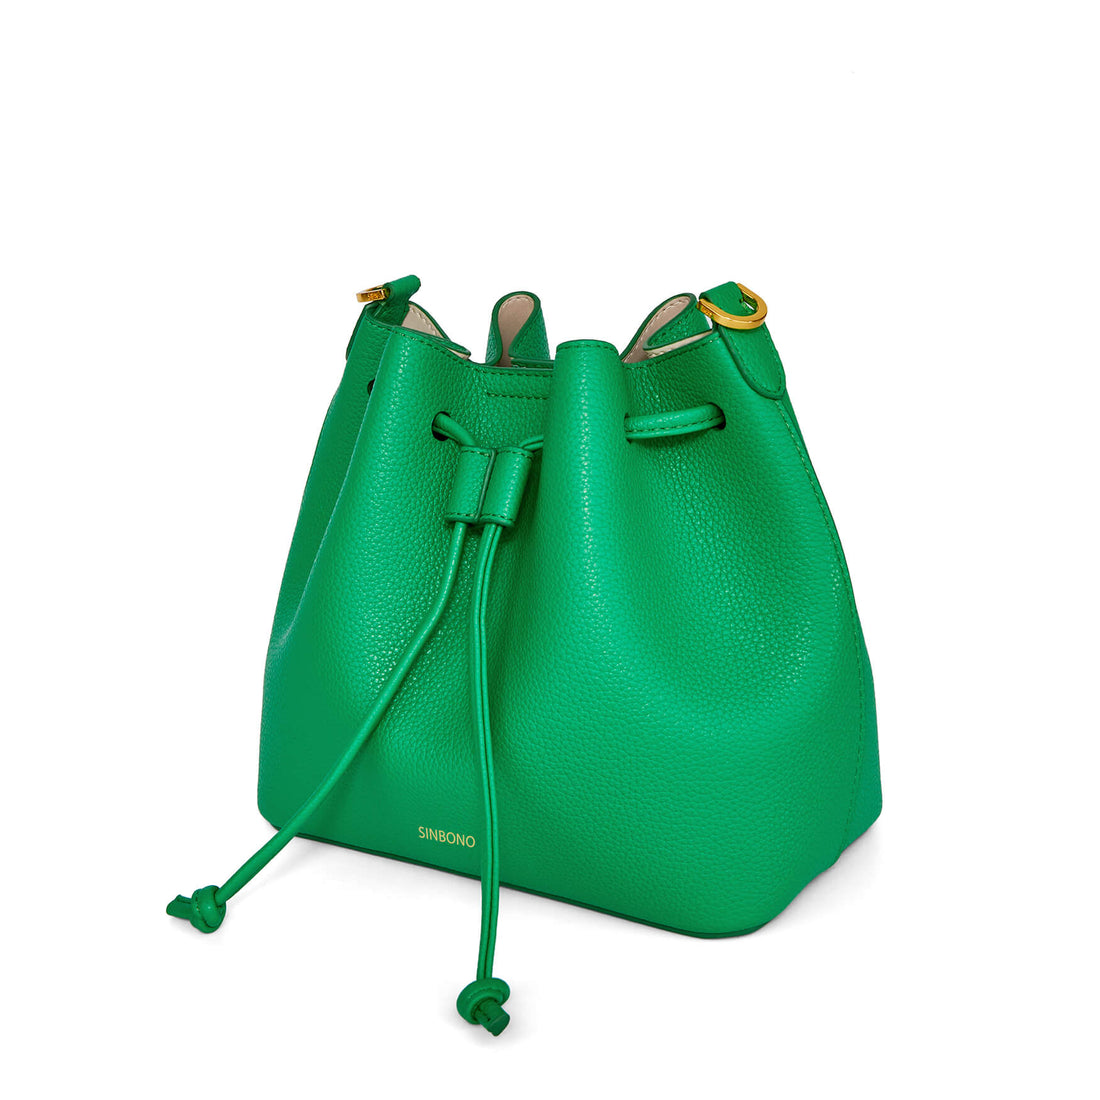 SINBONO Women's Designer Clutch Handbag